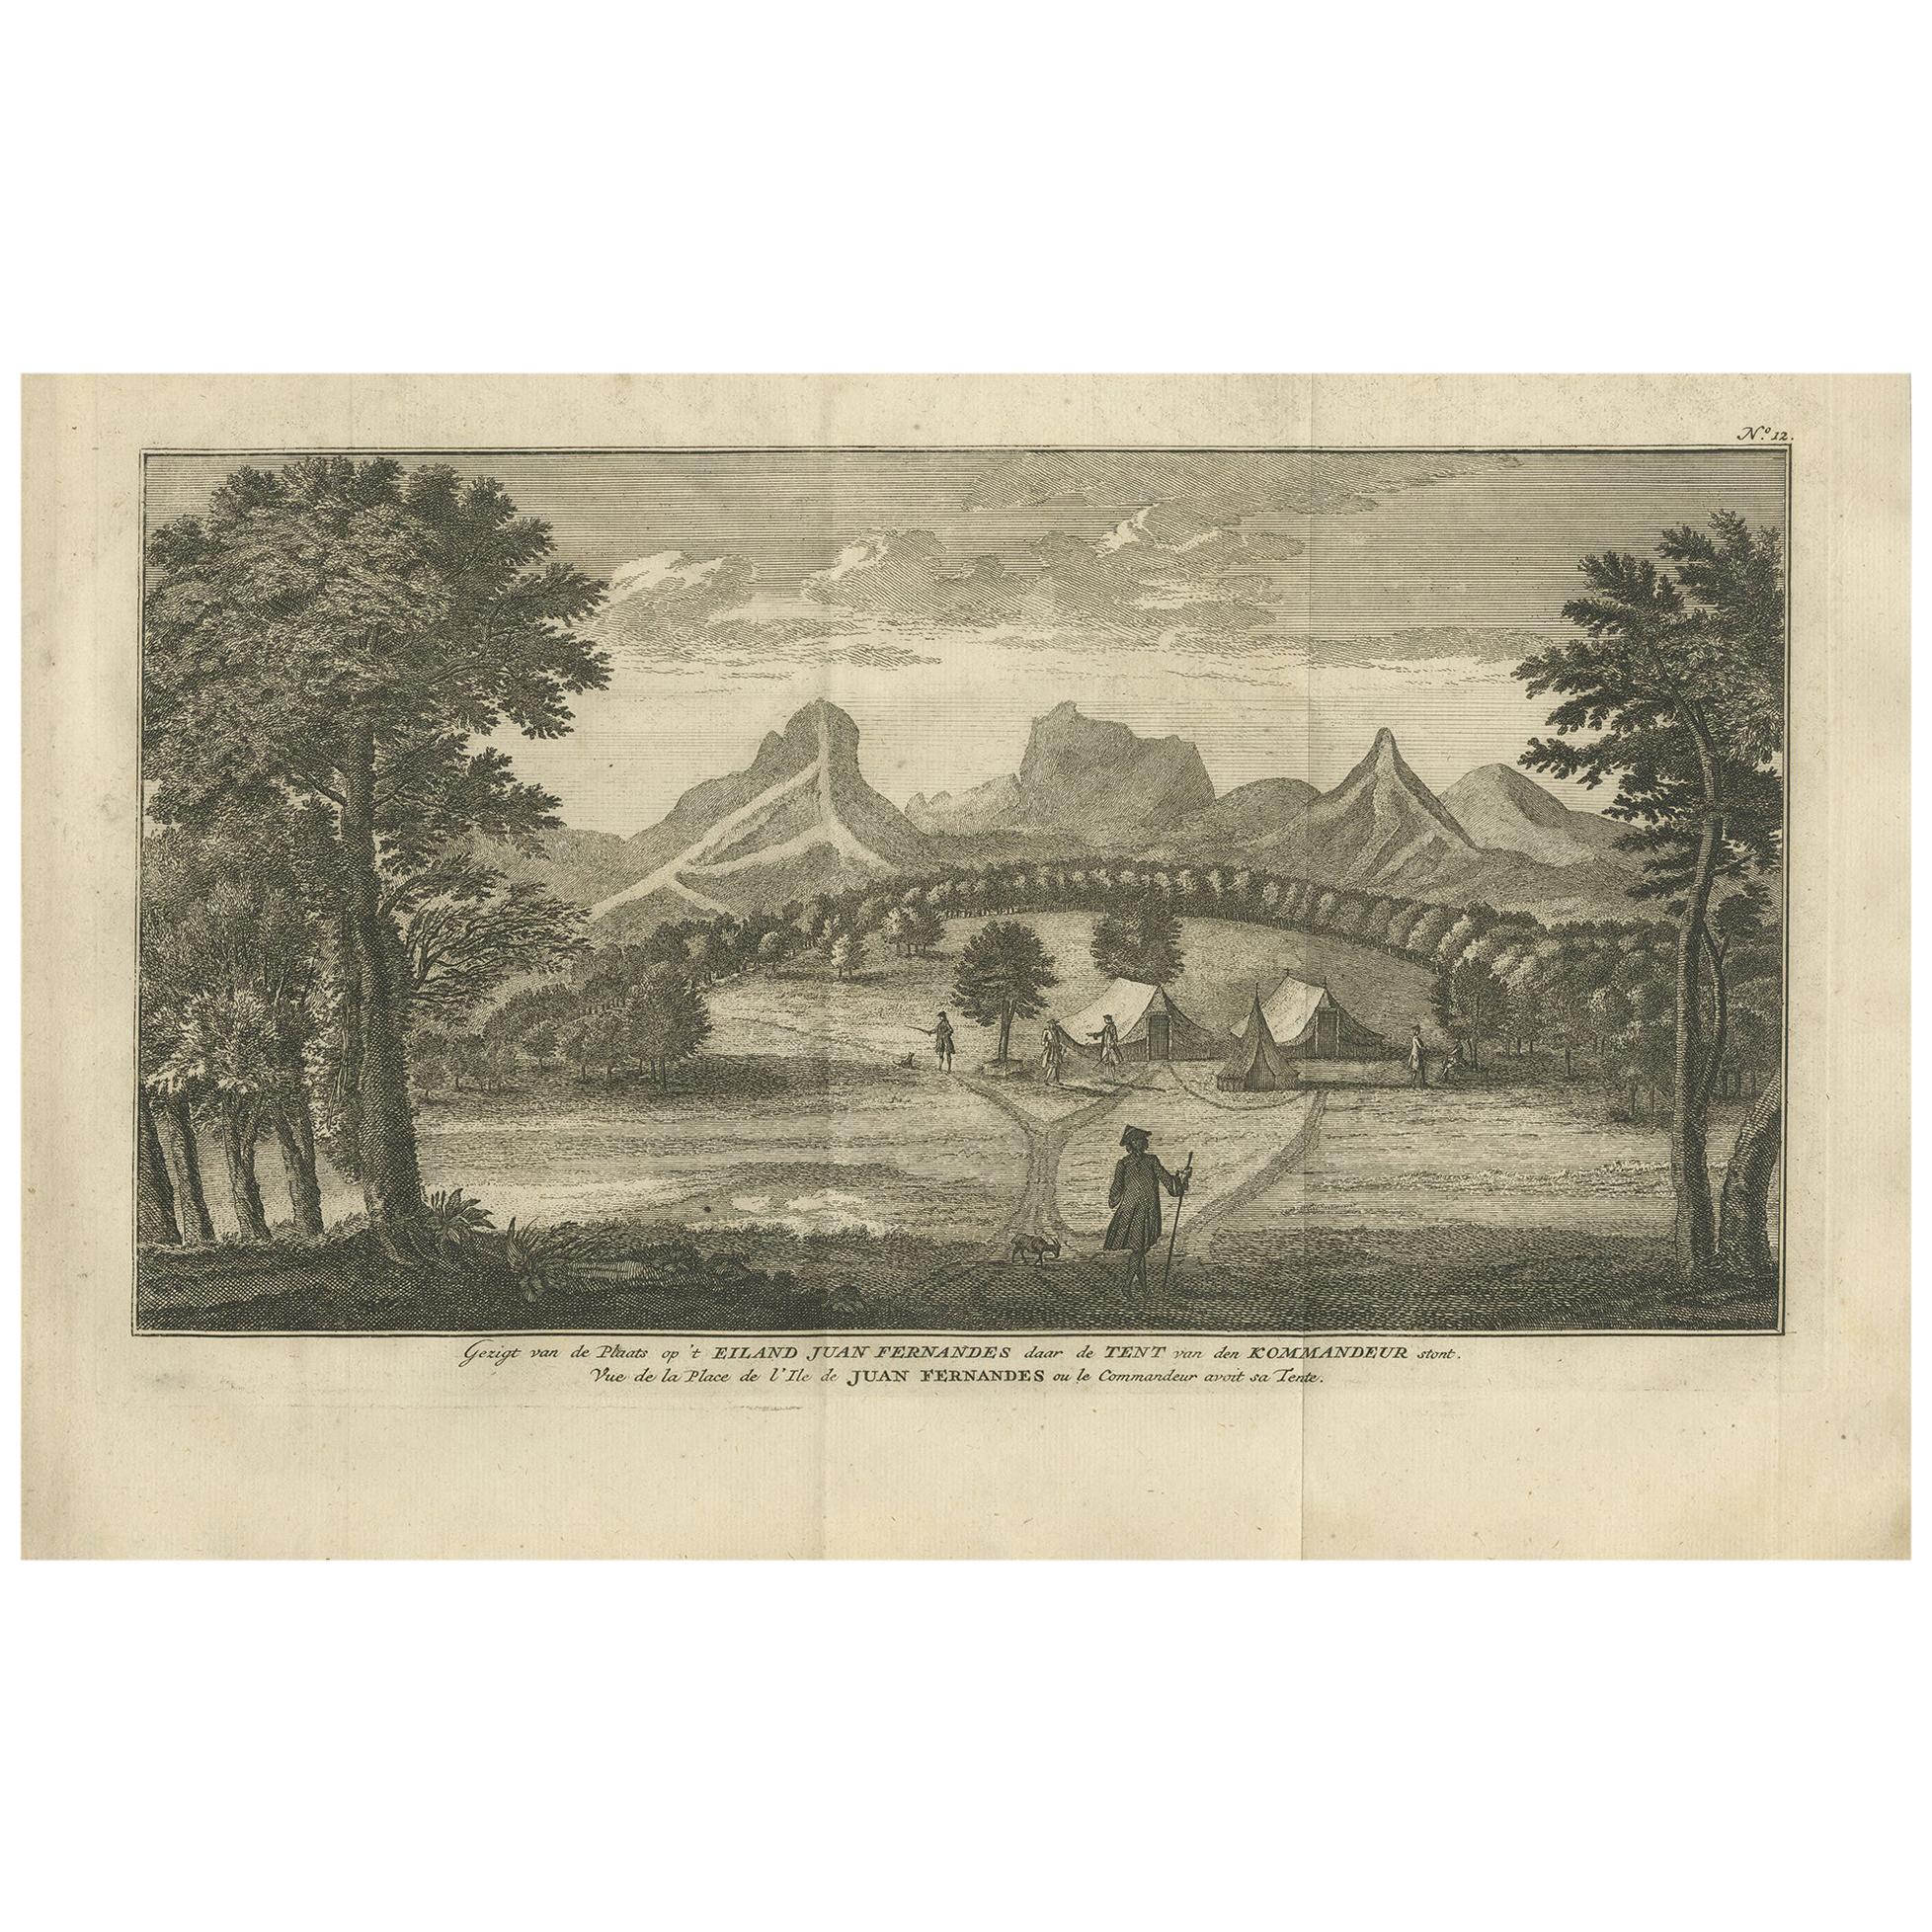 Antique Print of an Encampment on Juan Fernández Island by Anson '1749'